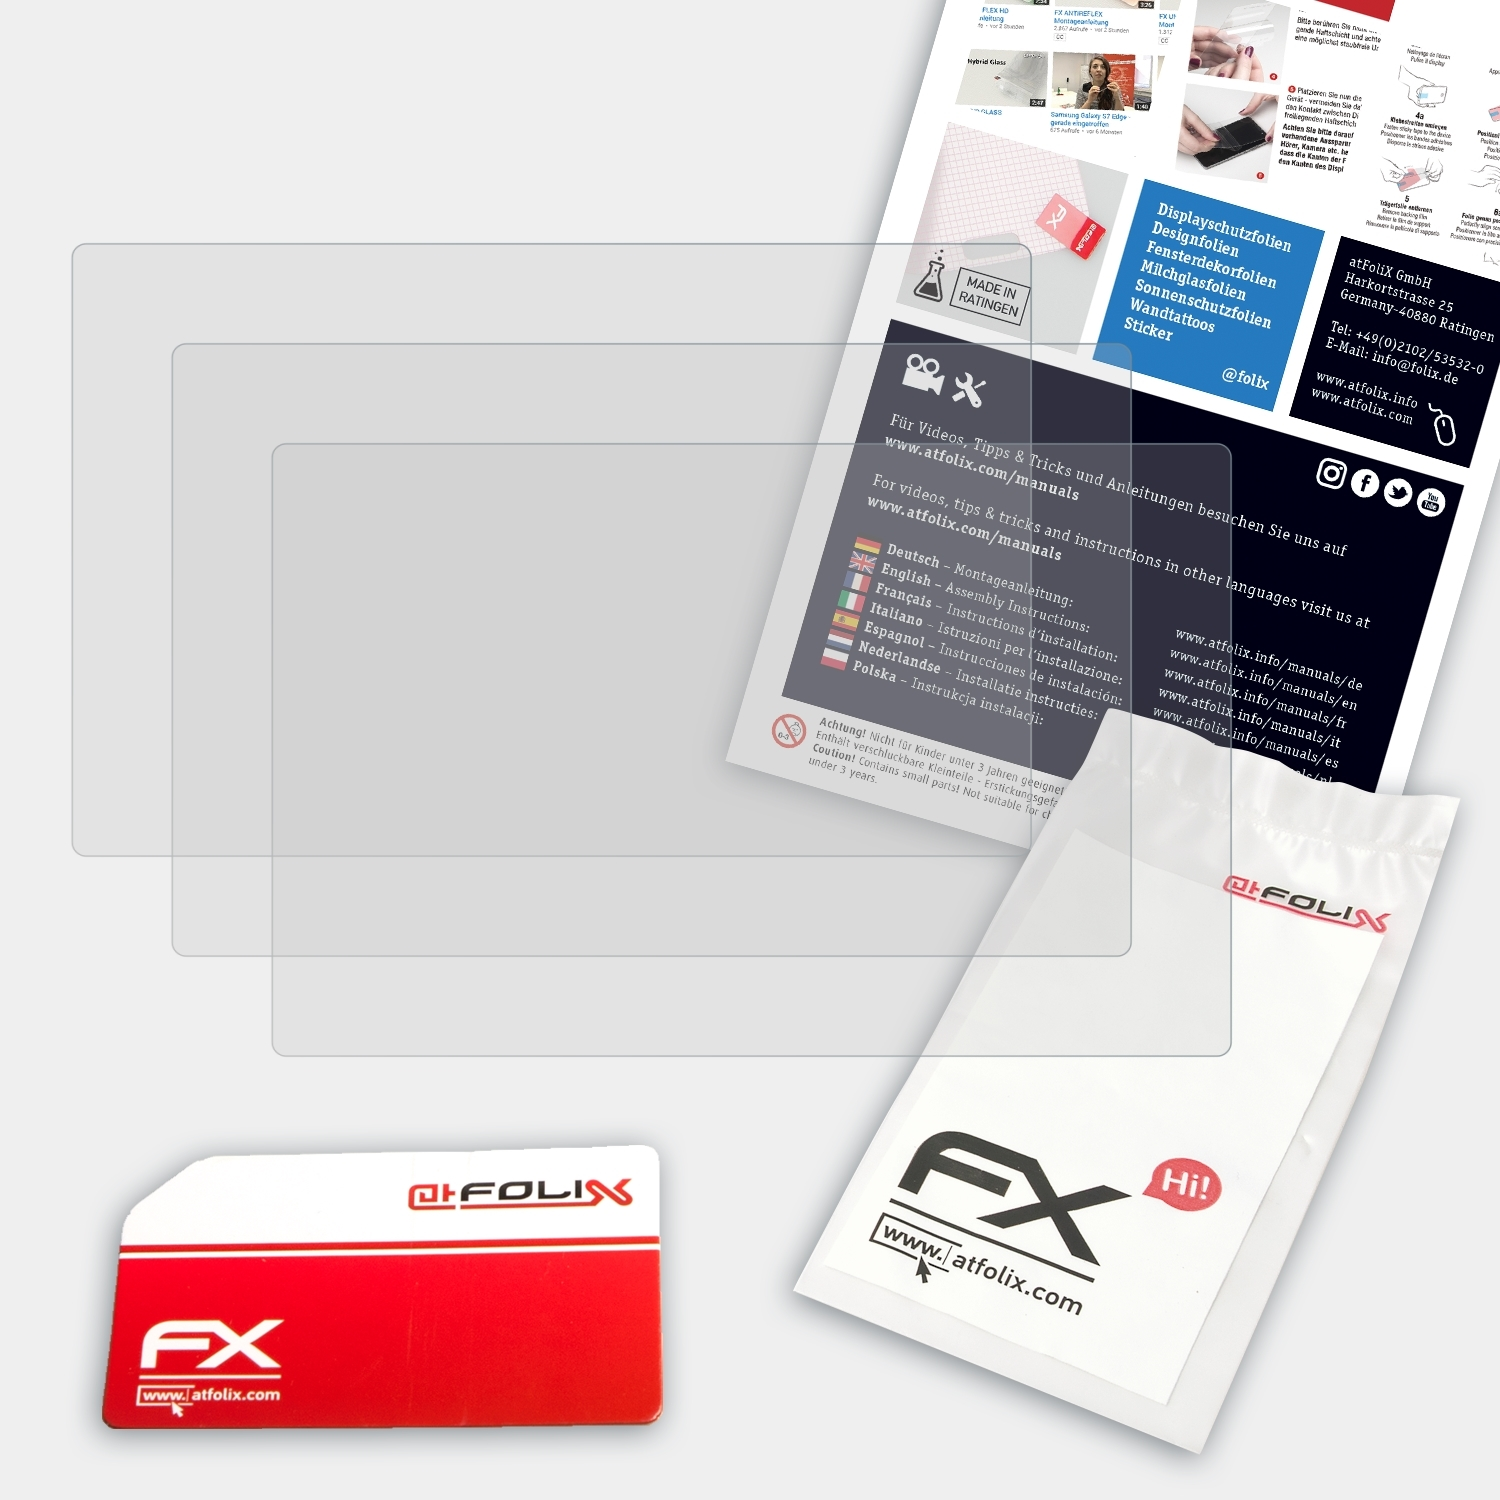 ATFOLIX 3x FX-Antireflex Displayschutz(für Fujifilm X-E2)